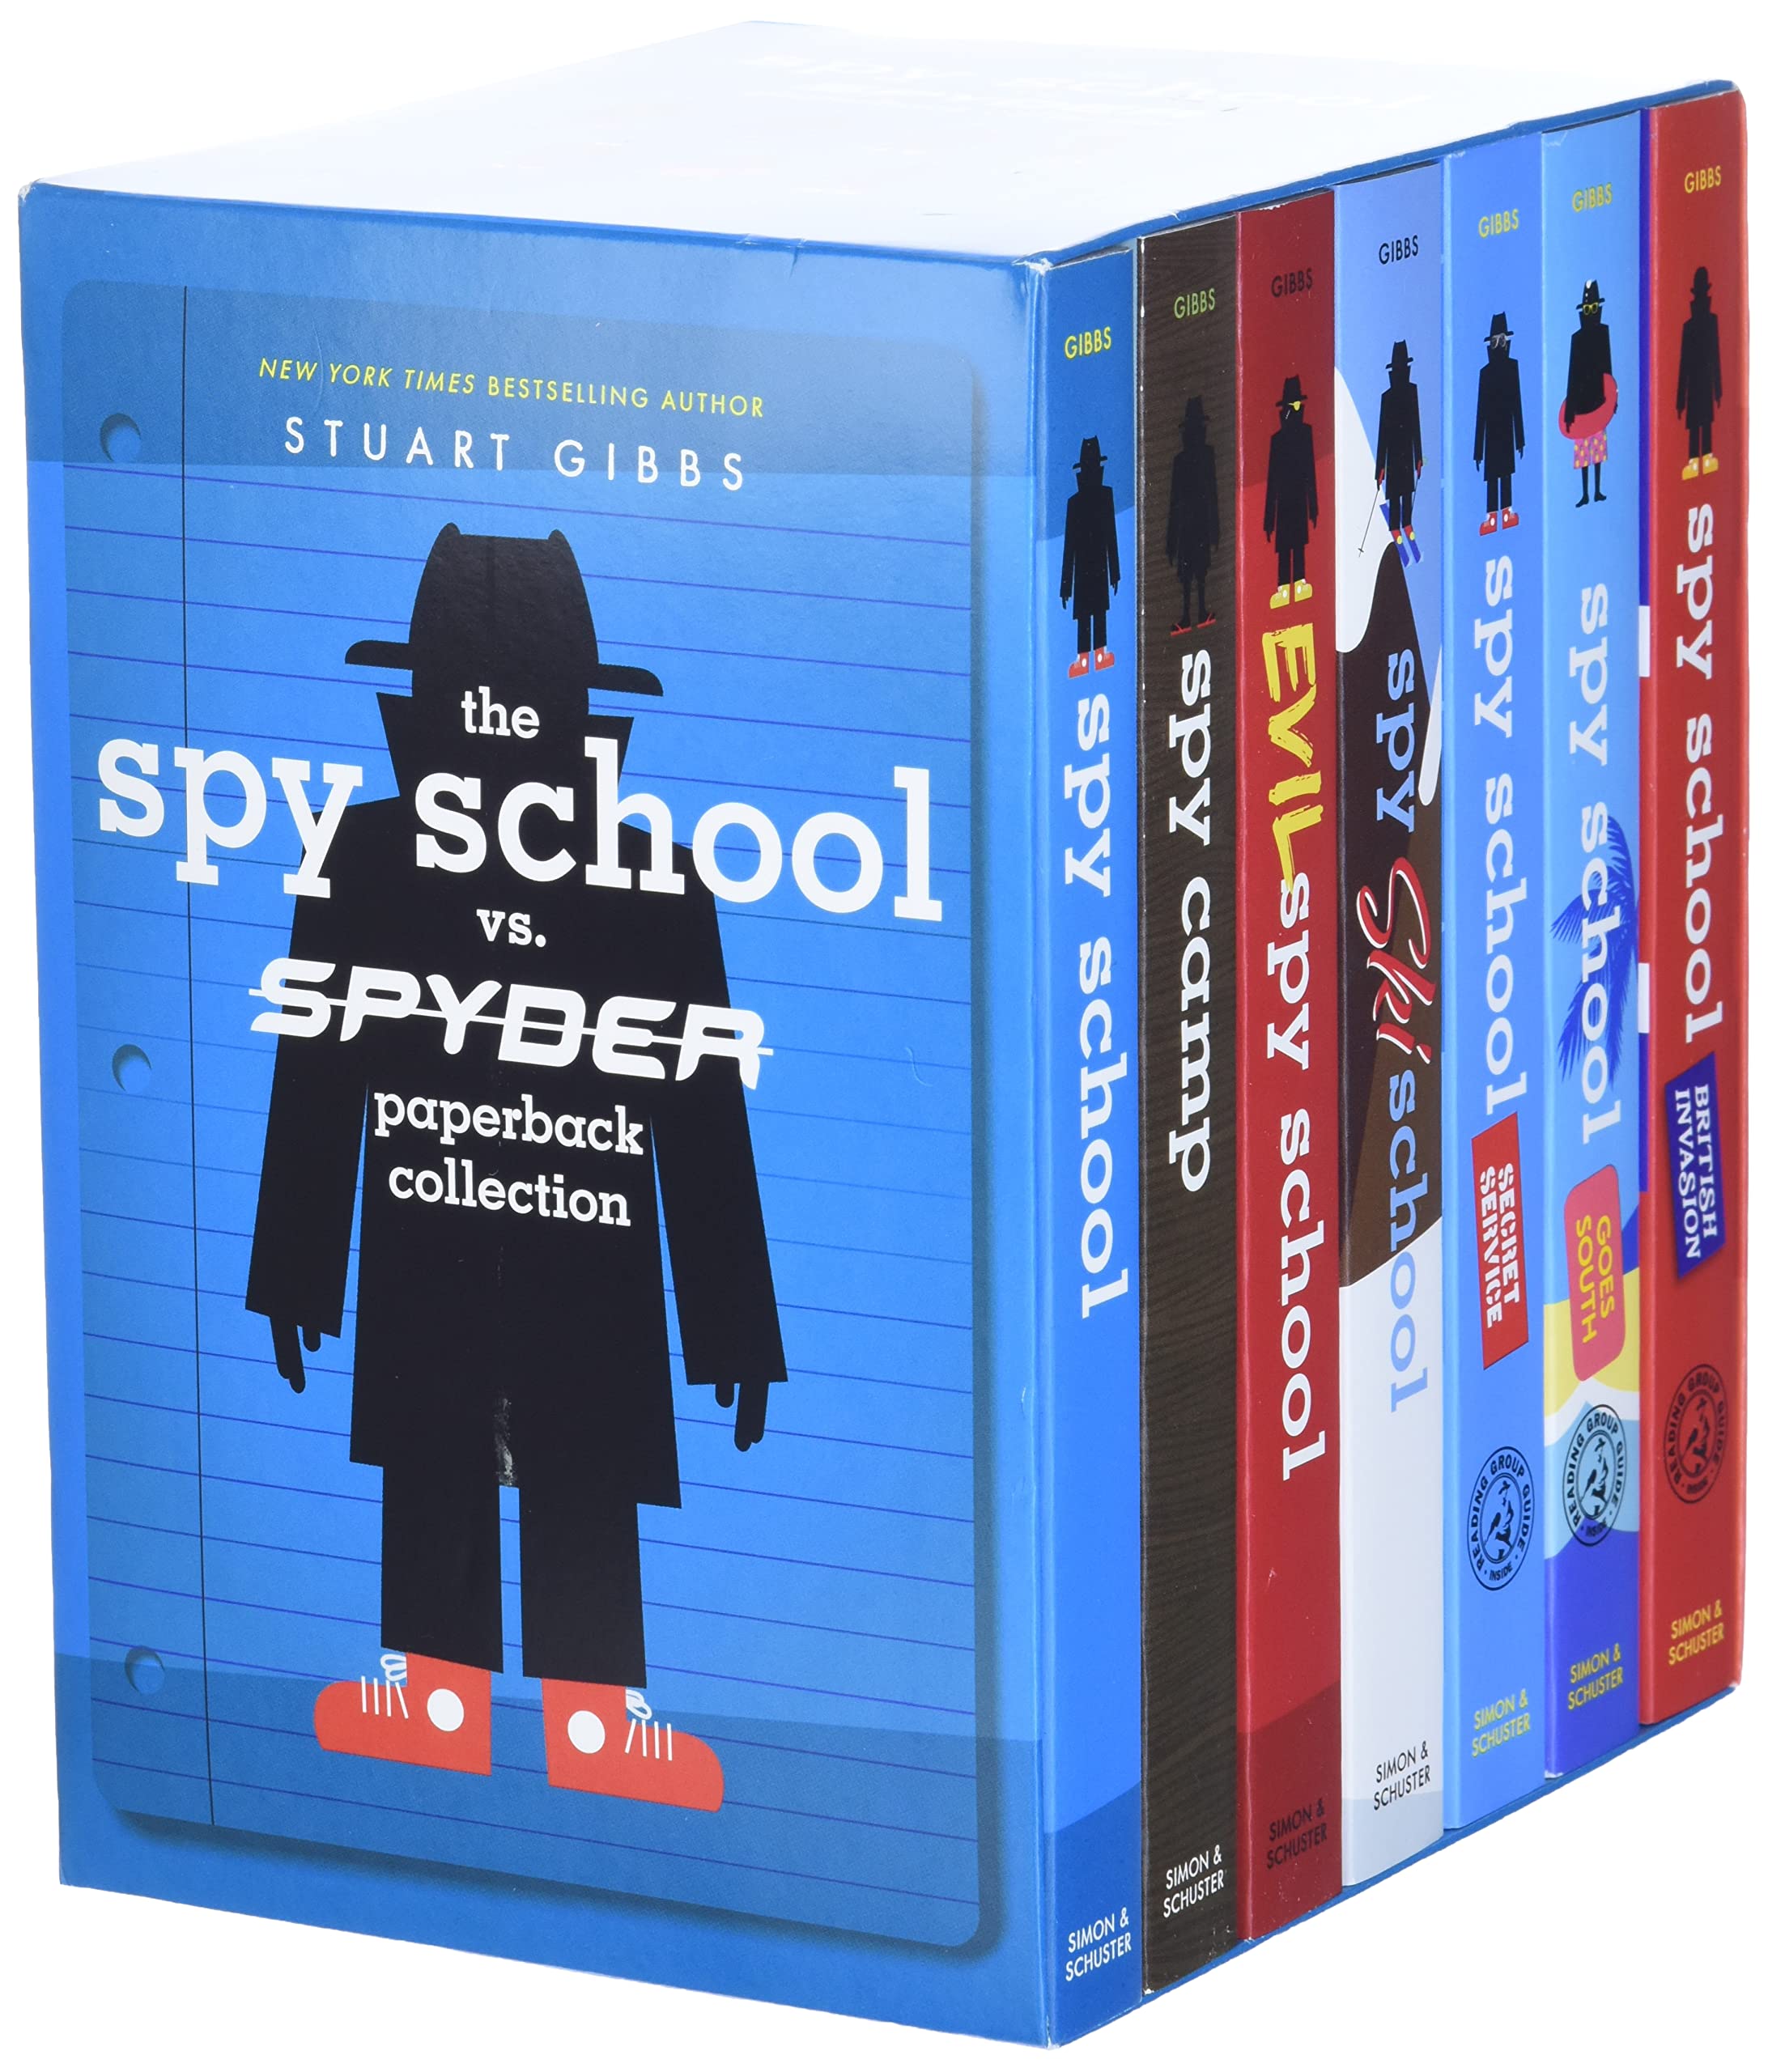 Collection　Spy　Animals　The　Spy　School　School　vs.　Paperback　SPYDER　Set):　(Boxed　–　Talking　Books